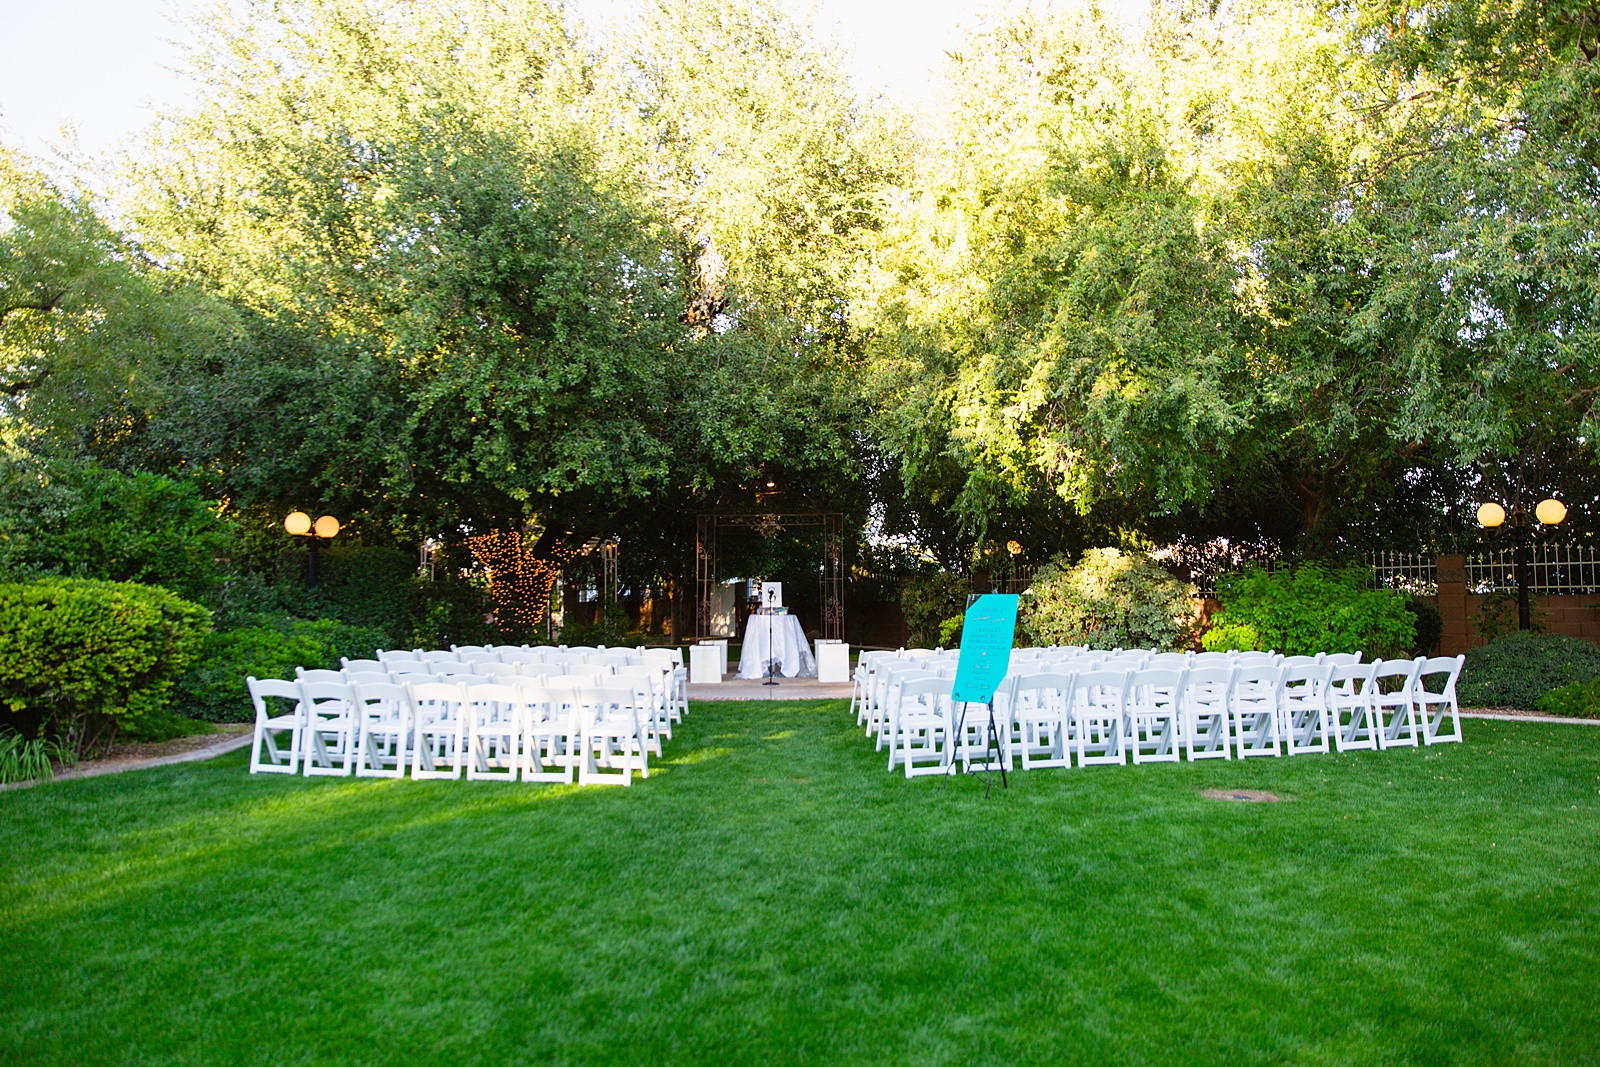 Wedding ceremony at Stonebridge Manor by Phoenix wedding photographer PMA Photography.